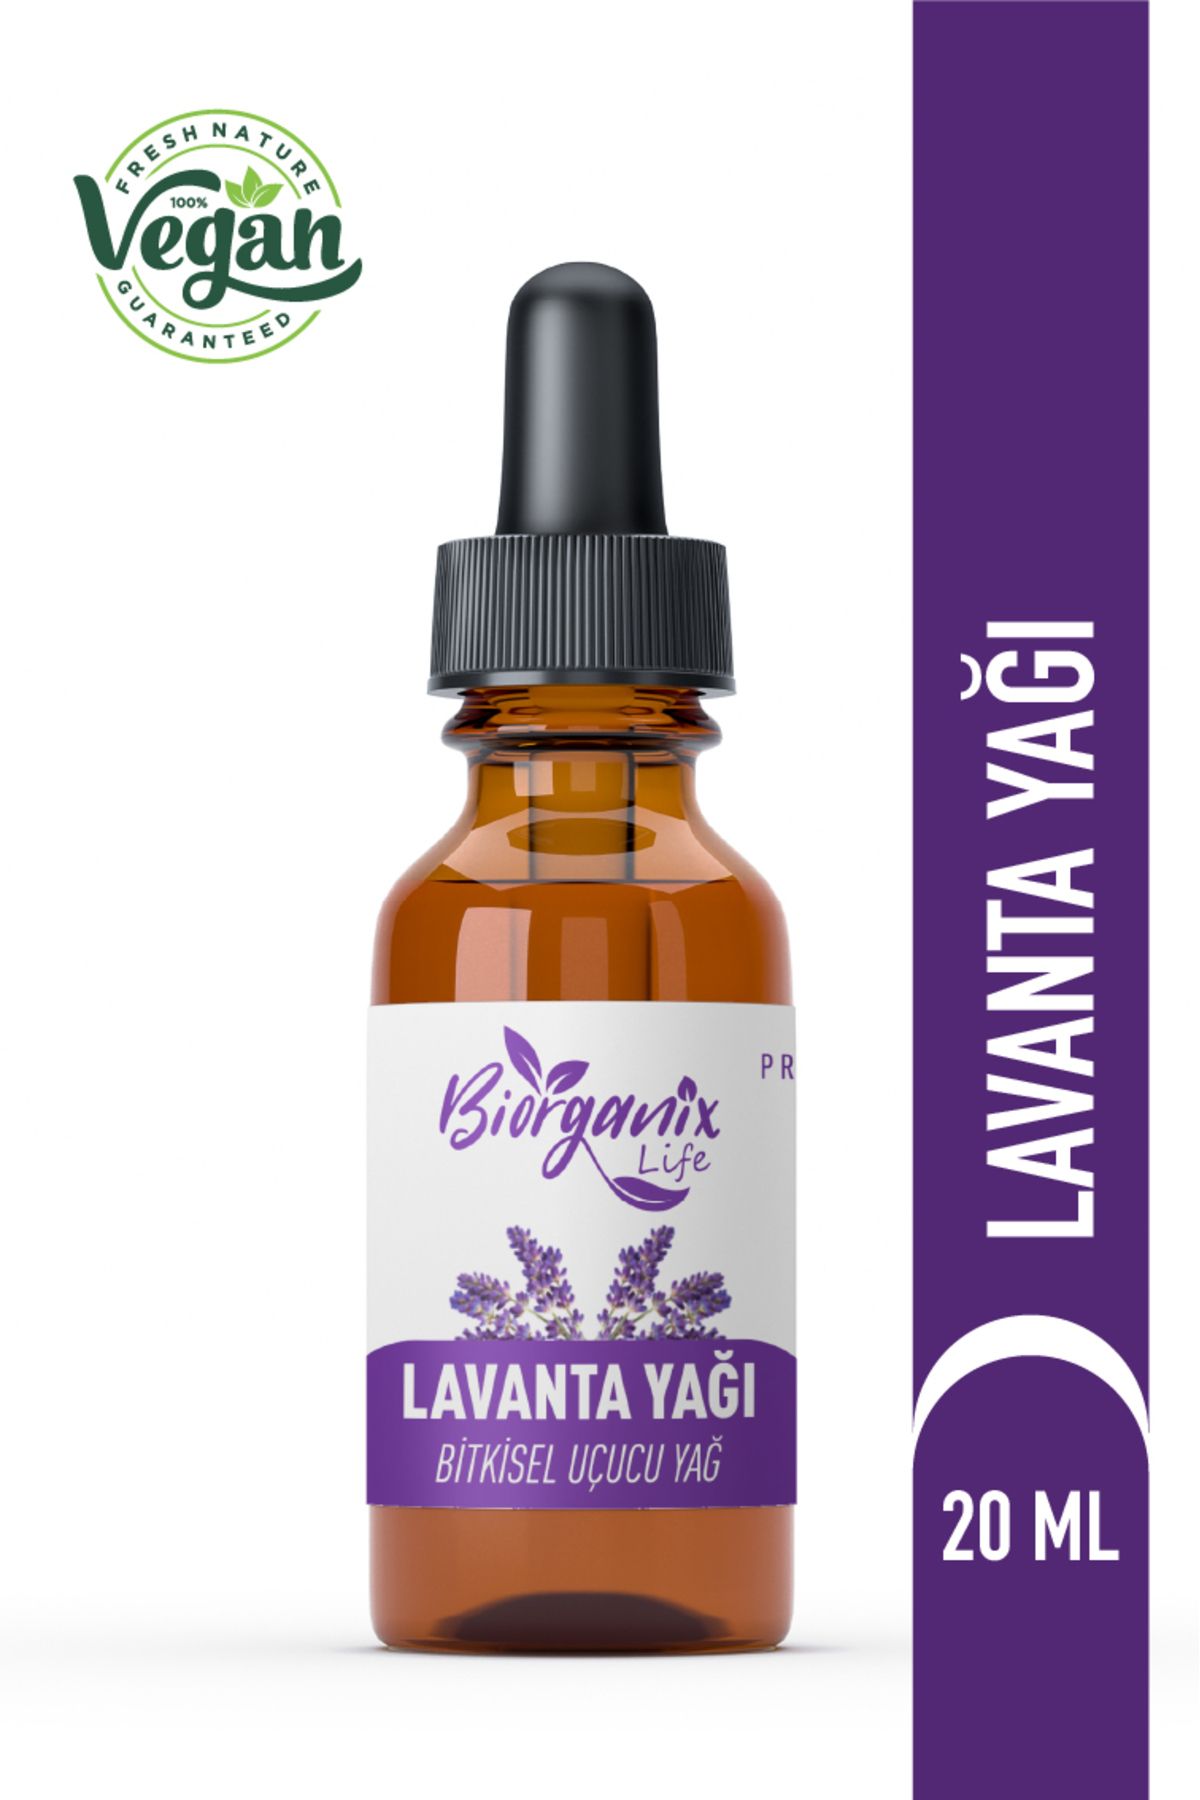 Biorganix Life Lavanta Yağı 20 ml Lavender Oil